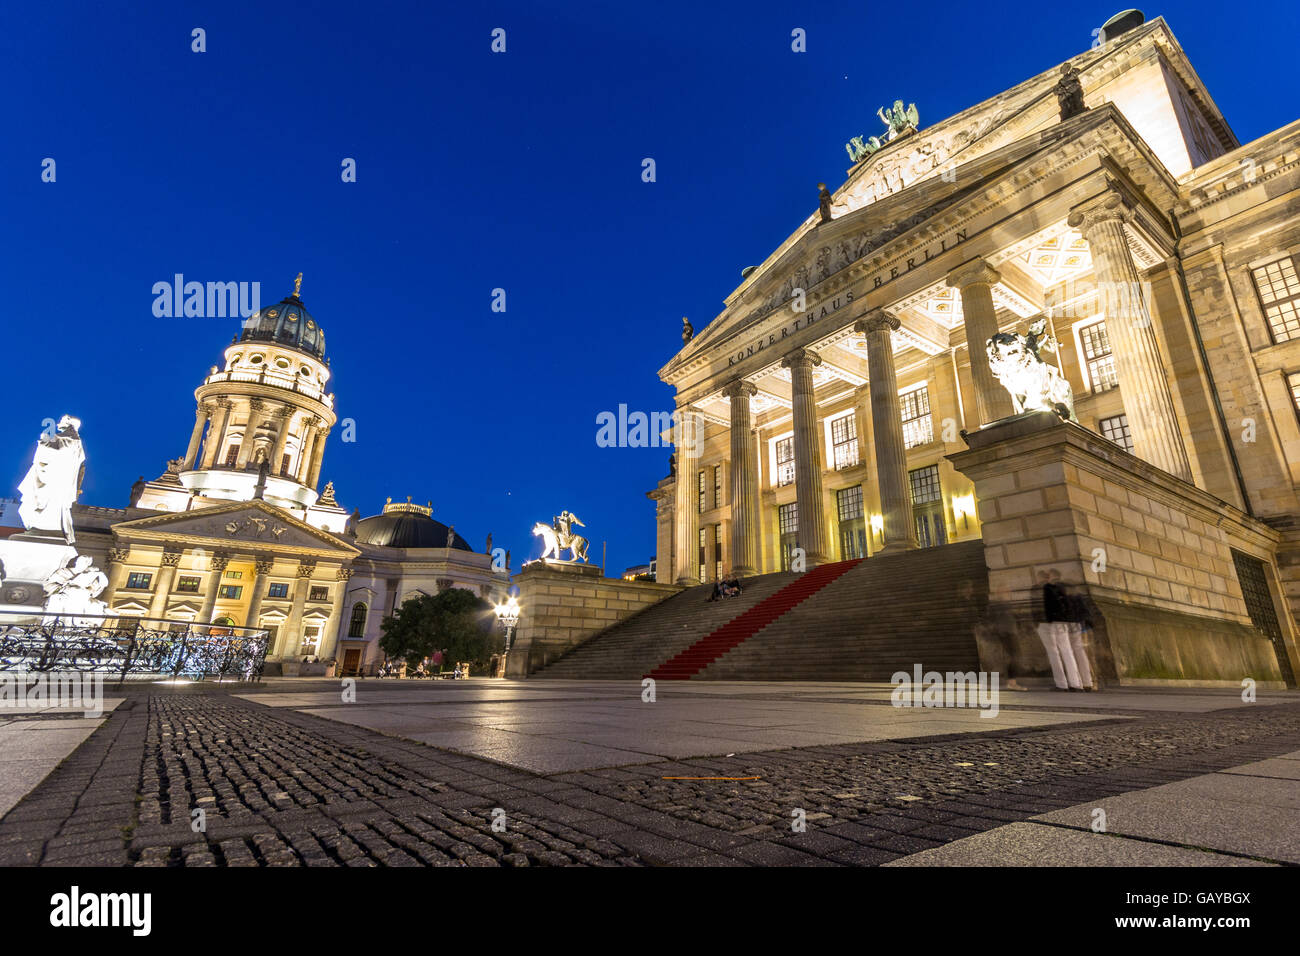 The historic concert hall (Konzerthaus) at Gendarmenmarkt at night in Berlin, Germany. Stock Photo